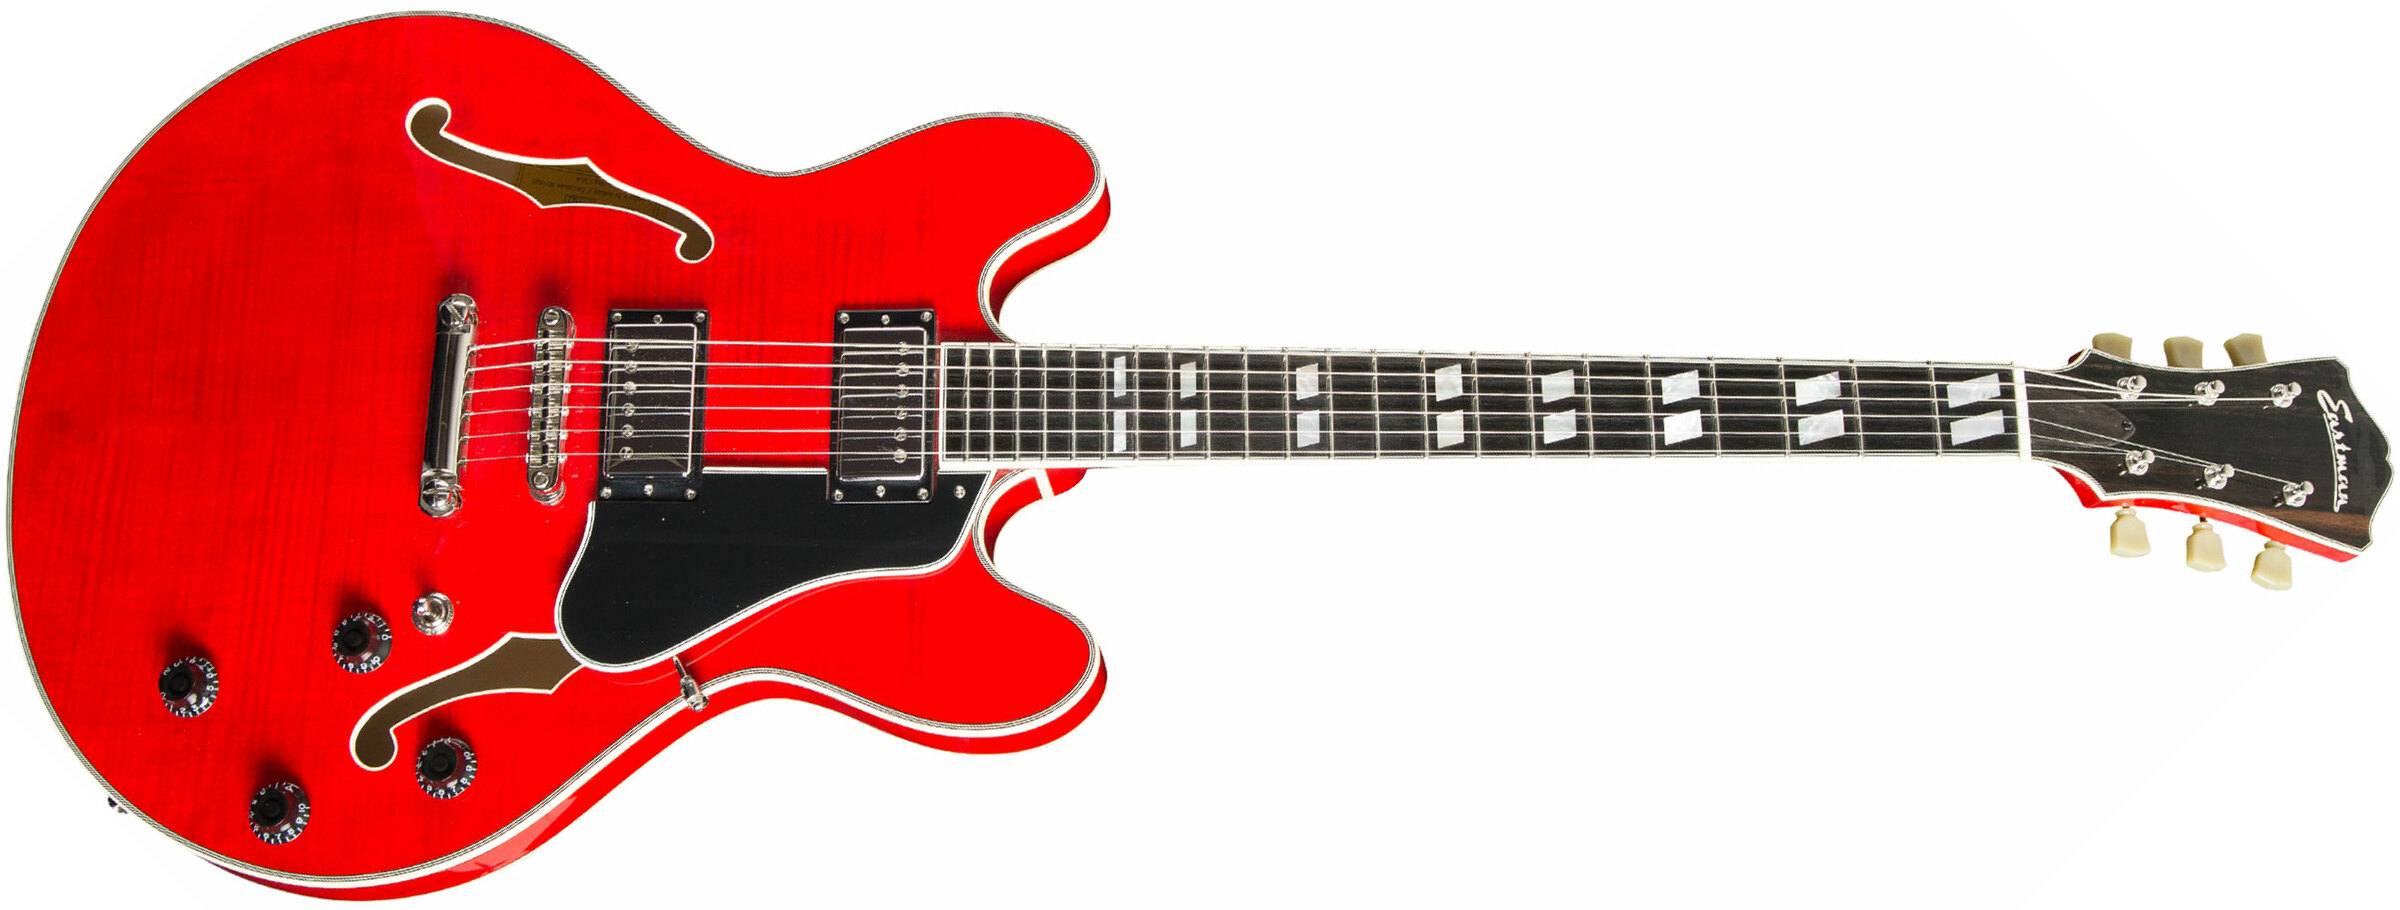 Eastman T486 Thinline Laminate Tout Erable Hh Seymour Duncan Ht Eb - Red - Semi-hollow electric guitar - Main picture